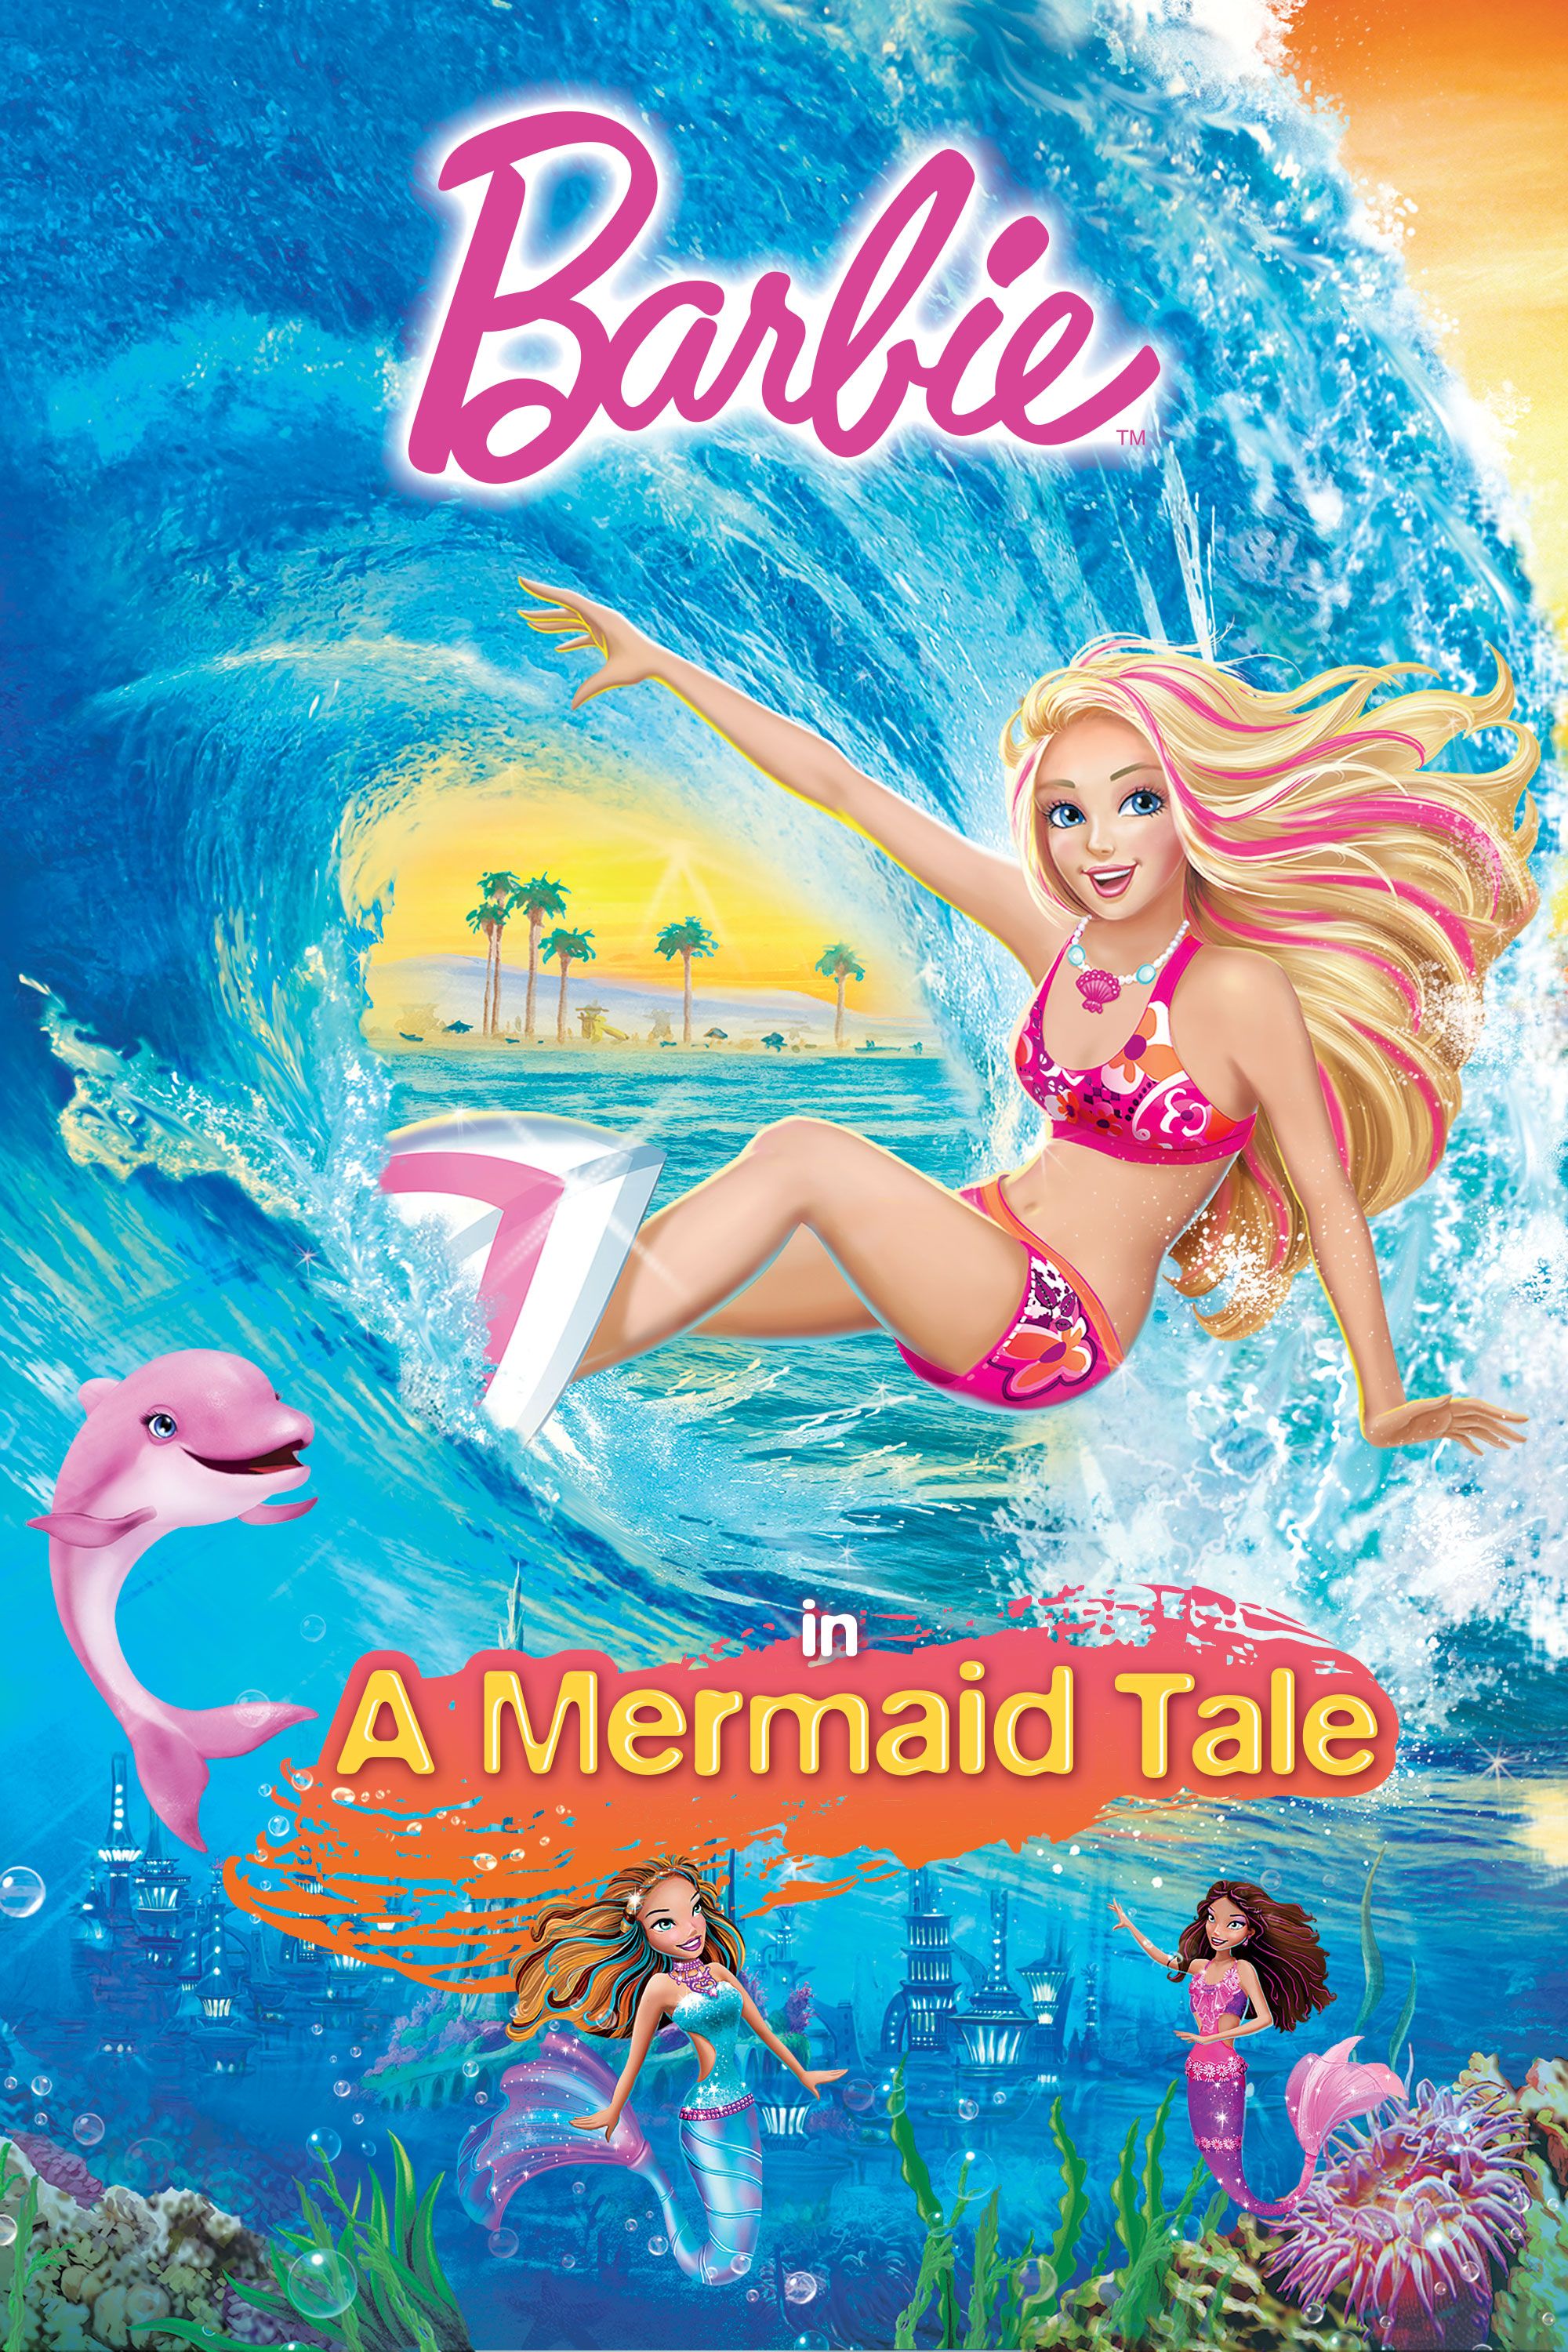 Mermaid tale